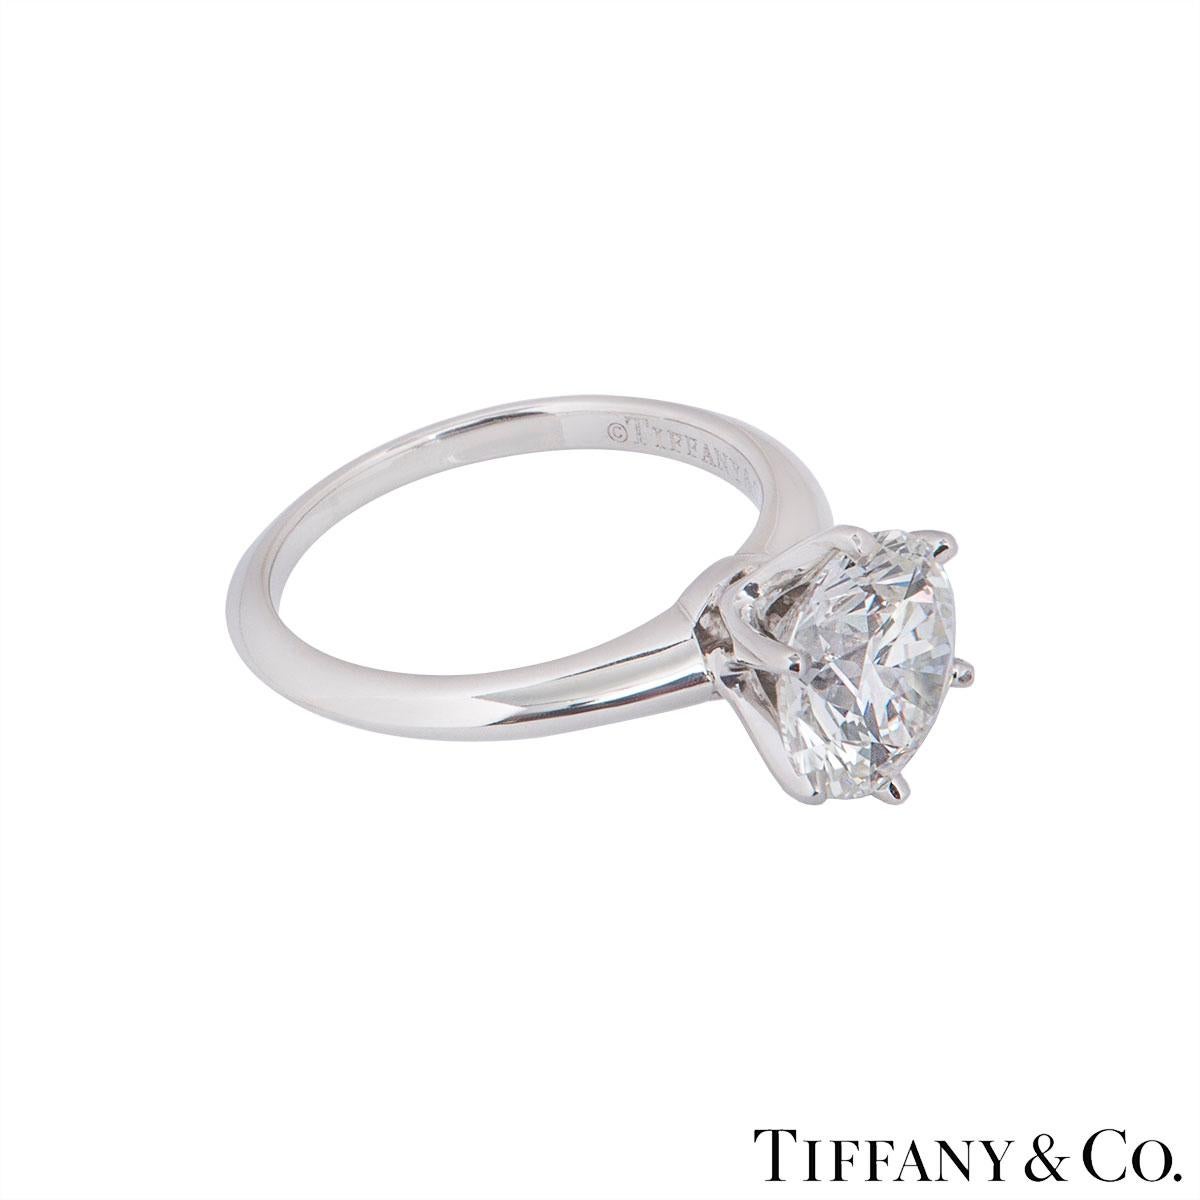 2.17 carat diamond tiffany cost